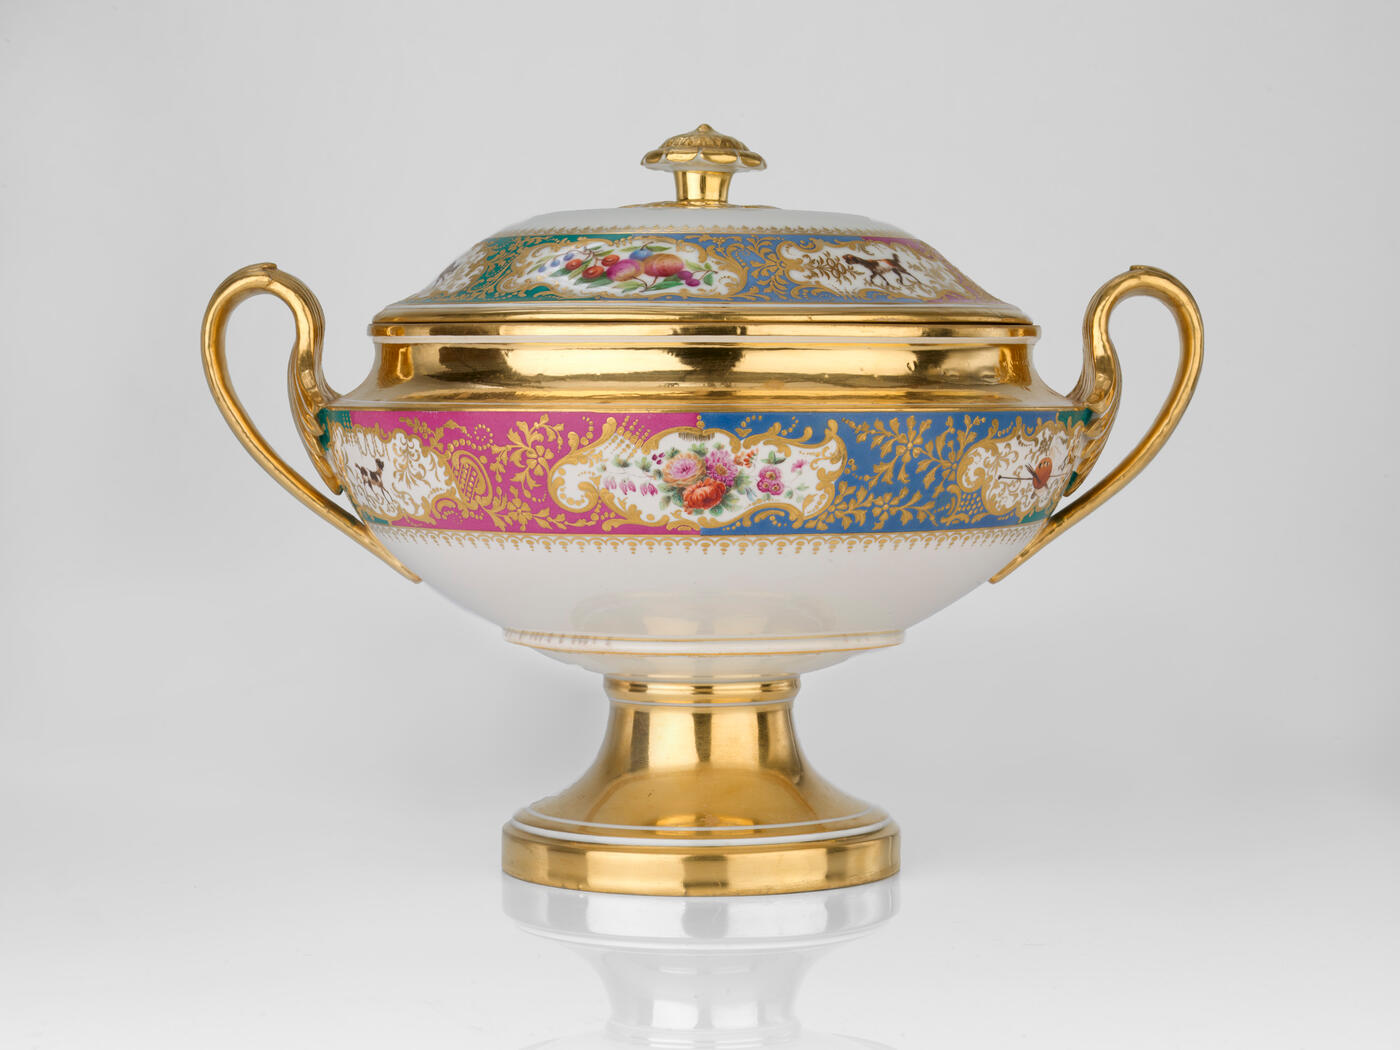 A Porcelain Soup-Tureen from the Grand Duke Mikhail Pavlovich Service